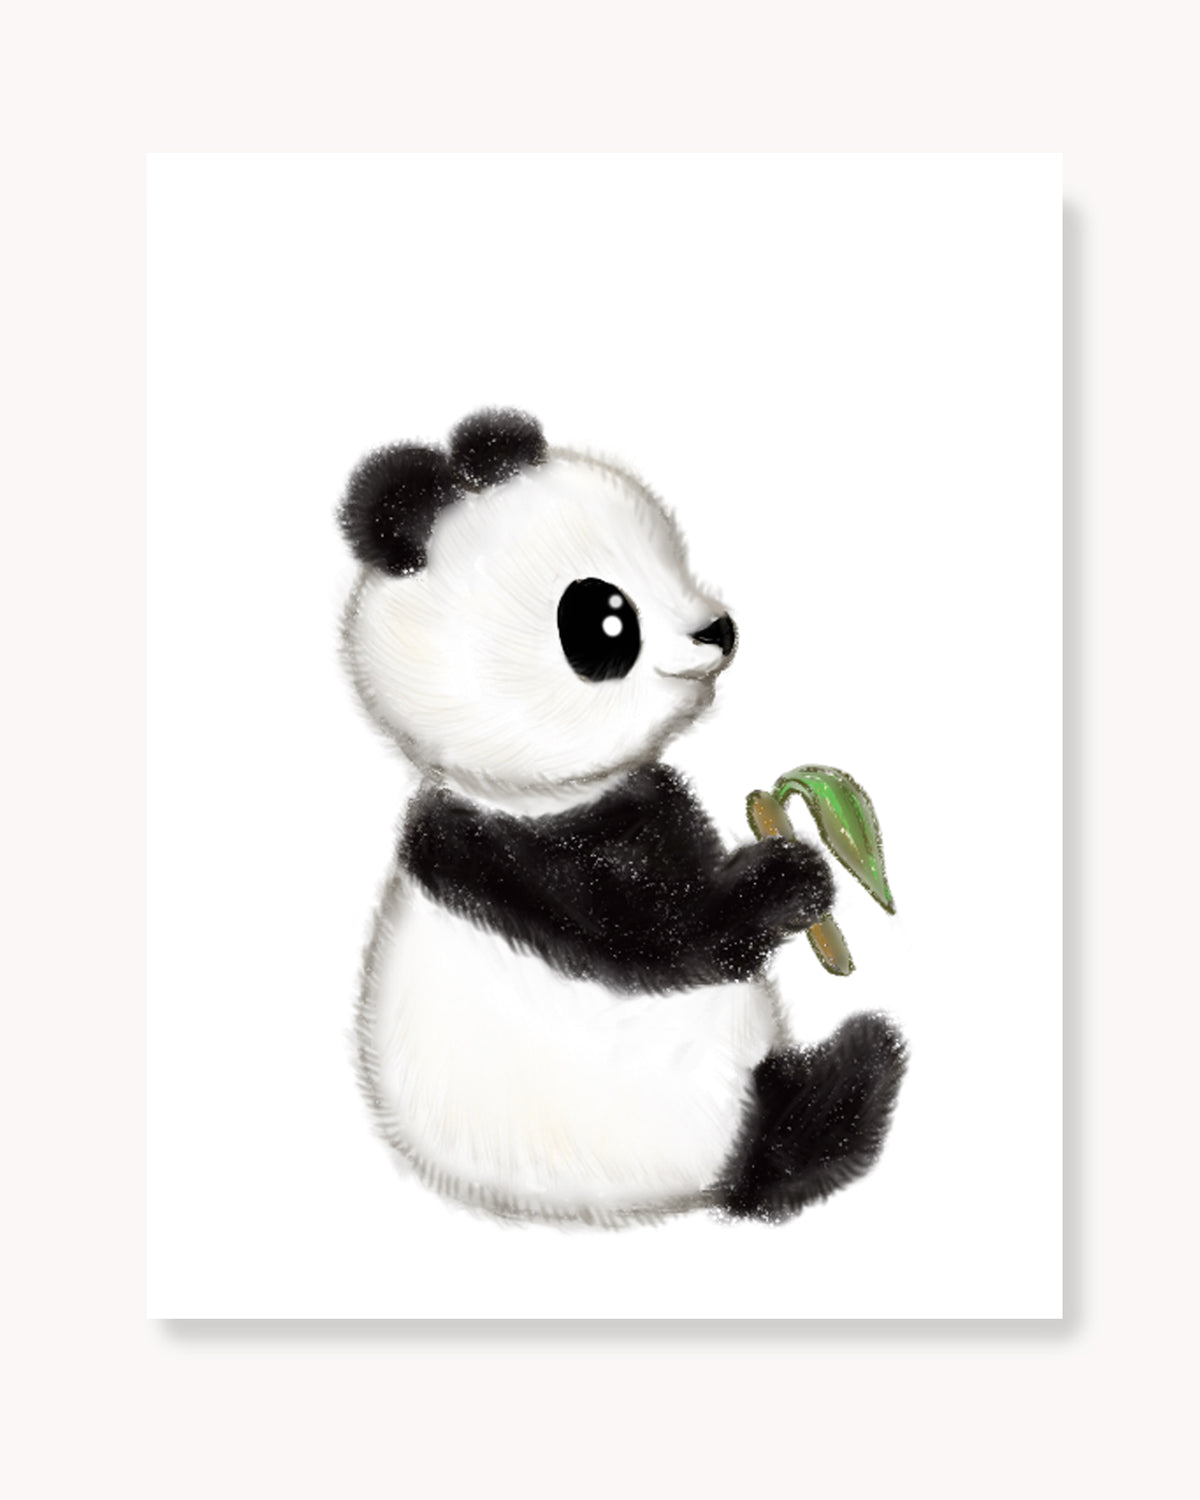 Hand drawn safari nursery decor wall art poster cute panda baby animal with bamboo